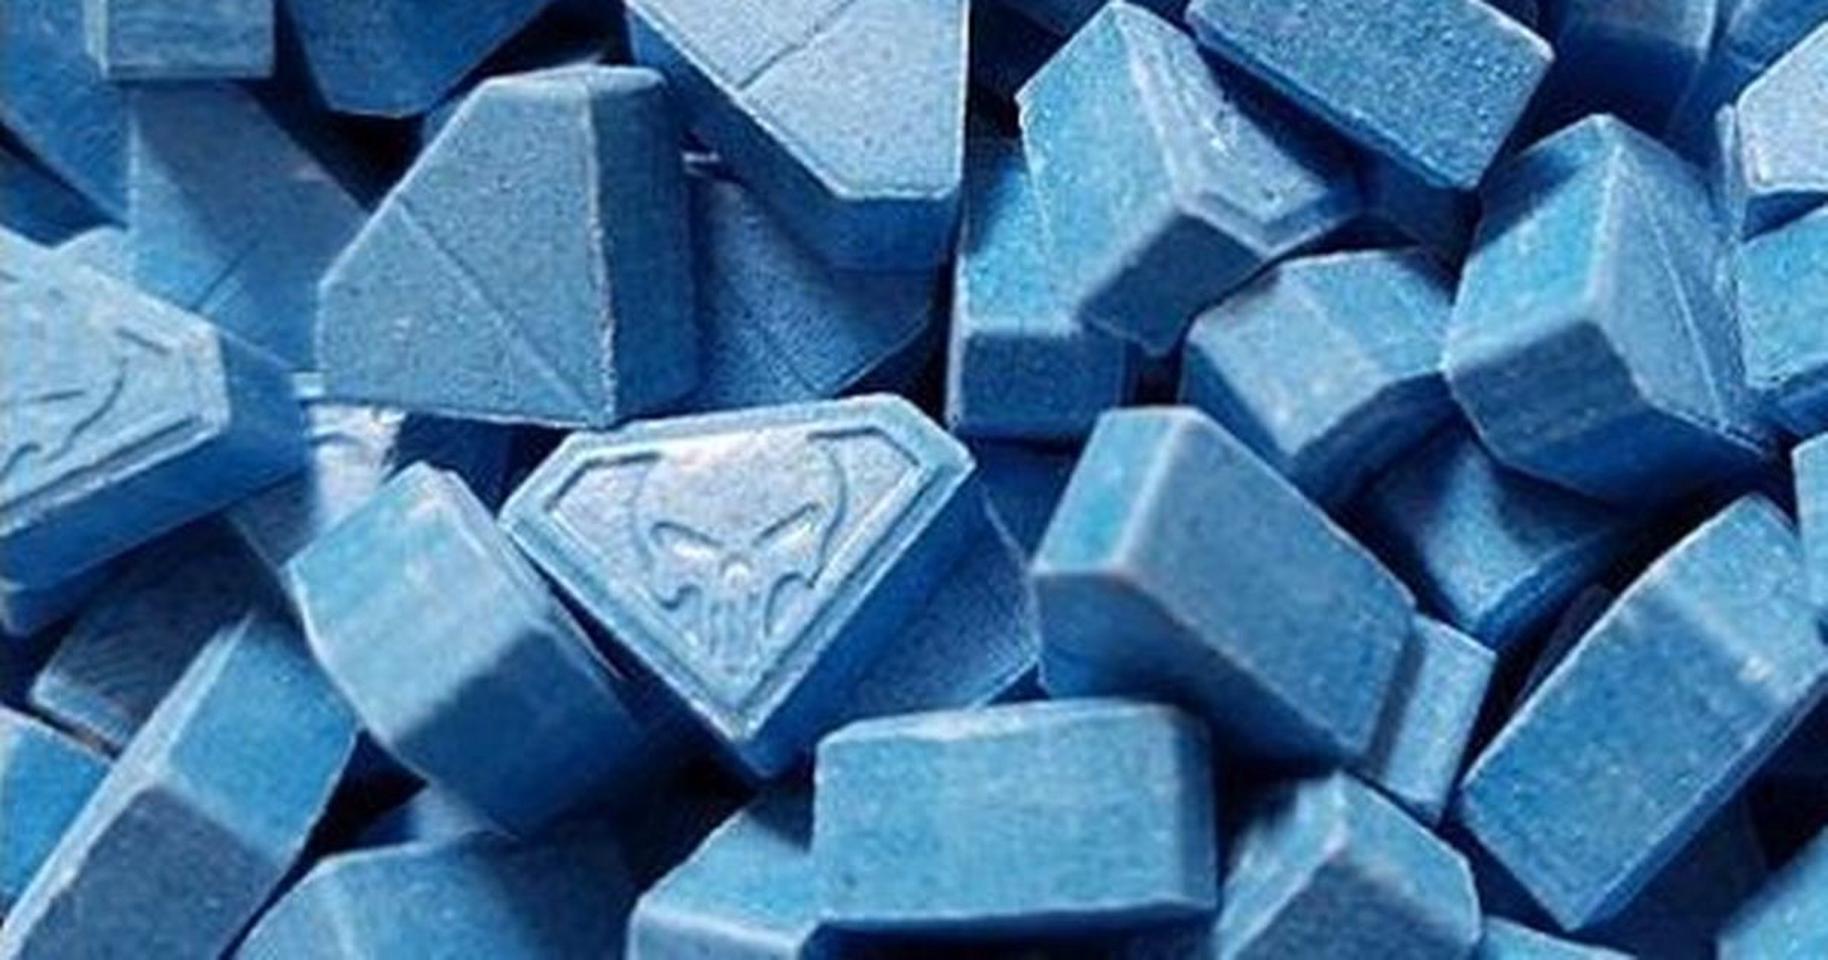 100x Blue Punisher 300mg MDMA Pills